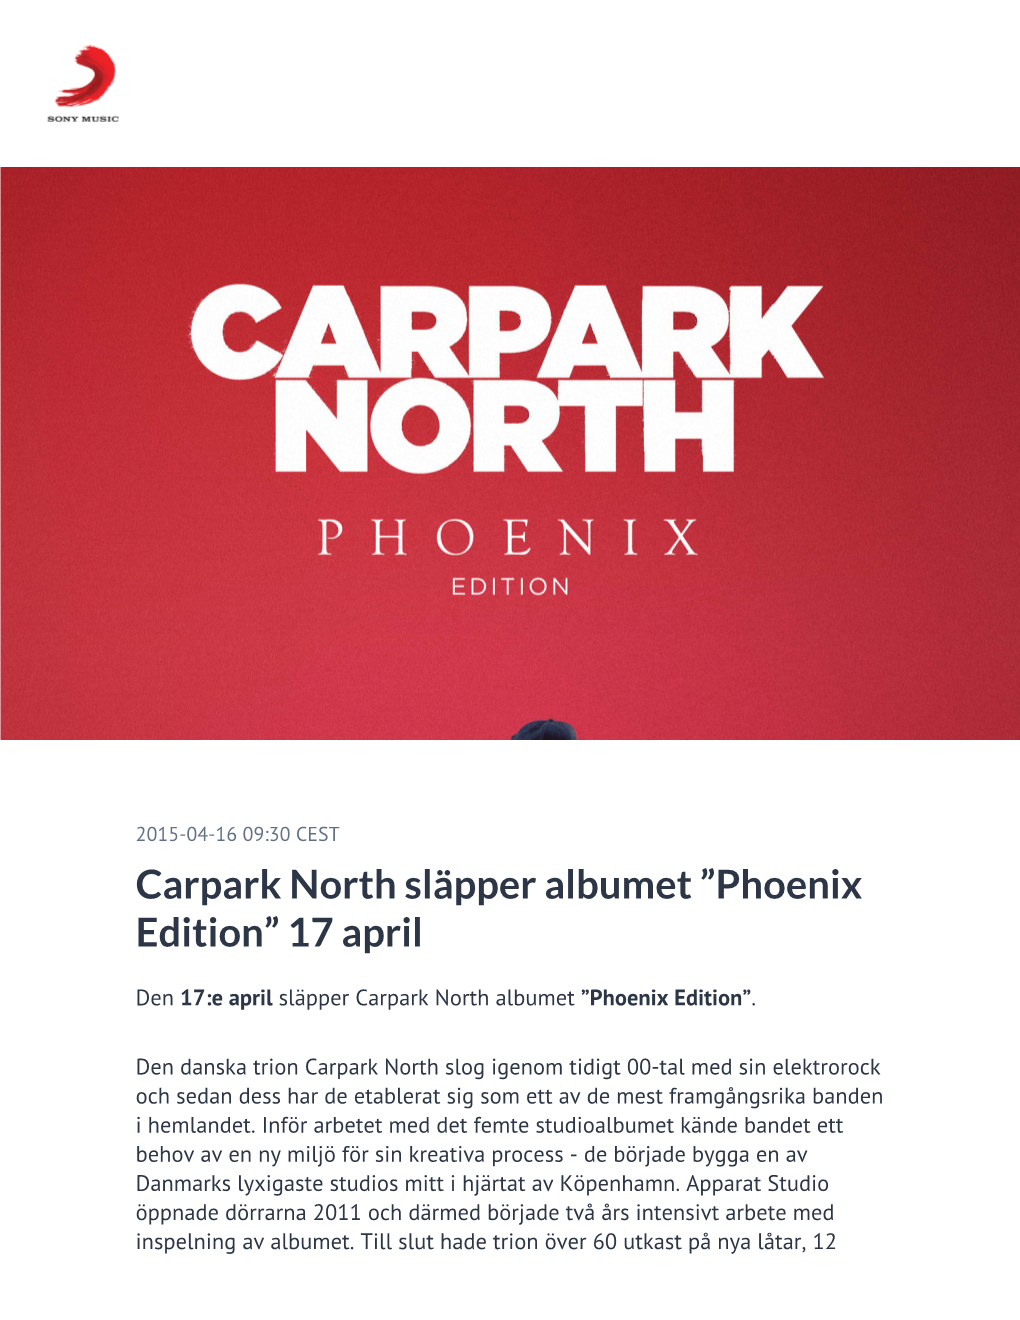 Carpark North Släpper Albumet ”Phoenix Edition” 17 April